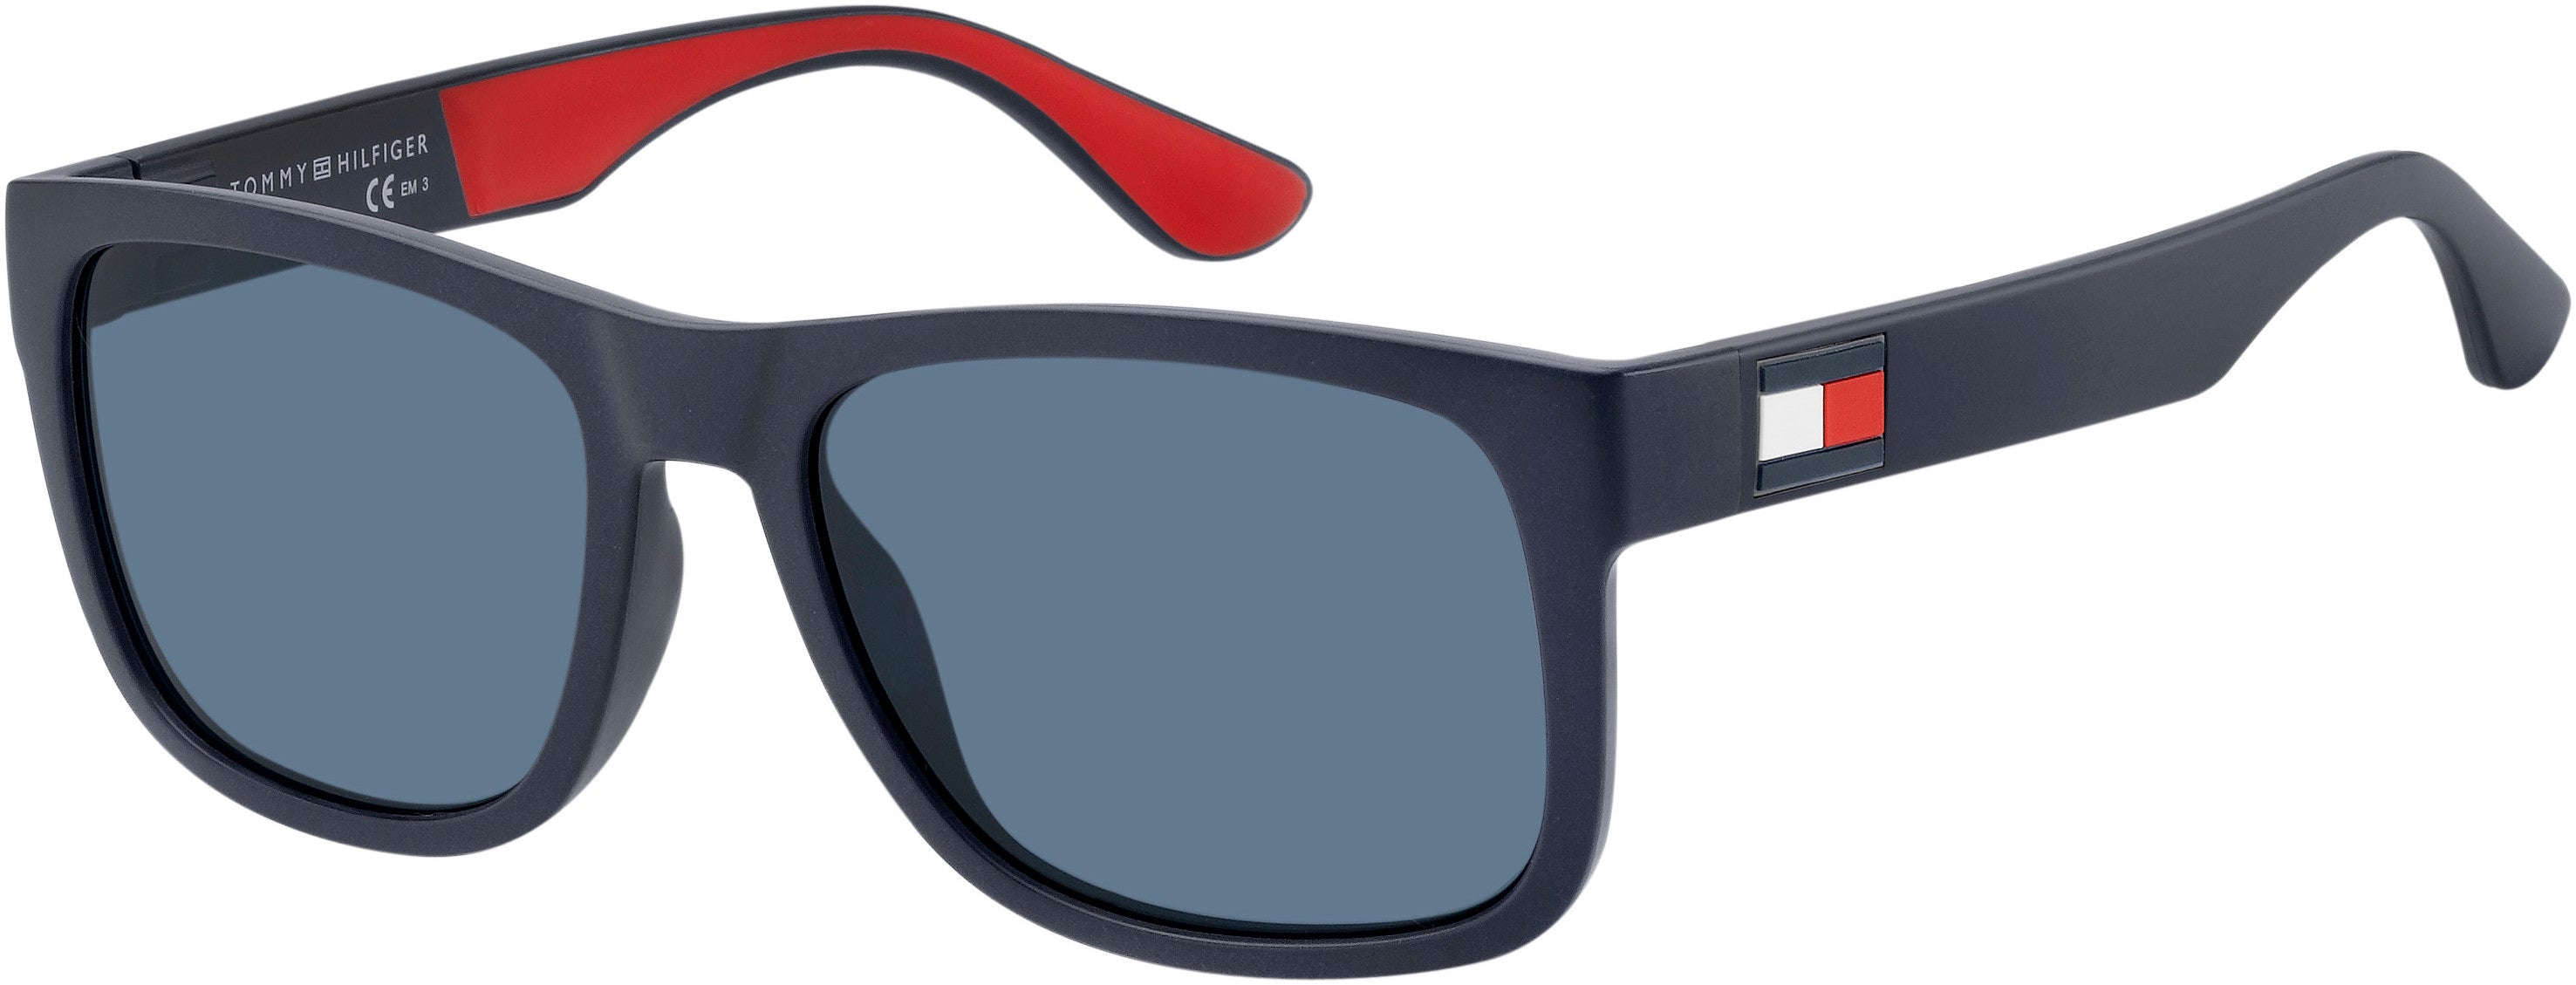 Tommy Hilfiger T. Hilfiger 1556/S Rectangular Sunglasses 08RU-08RU  Bl Red White (KU Blue)